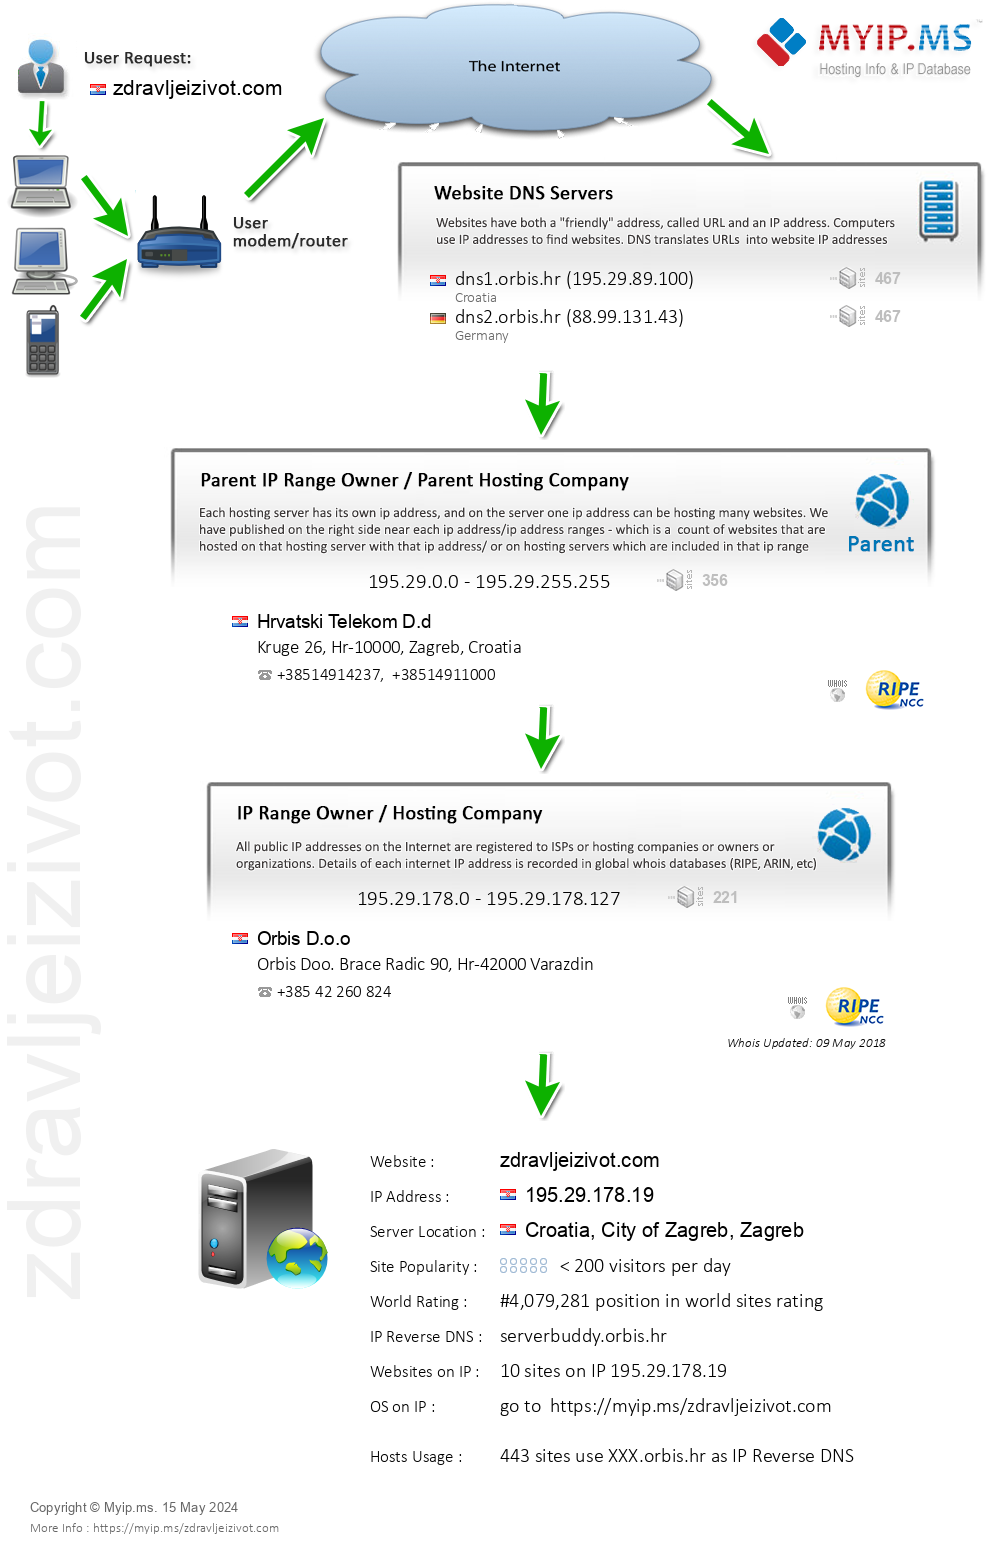 Zdravljeizivot.com - Website Hosting Visual IP Diagram